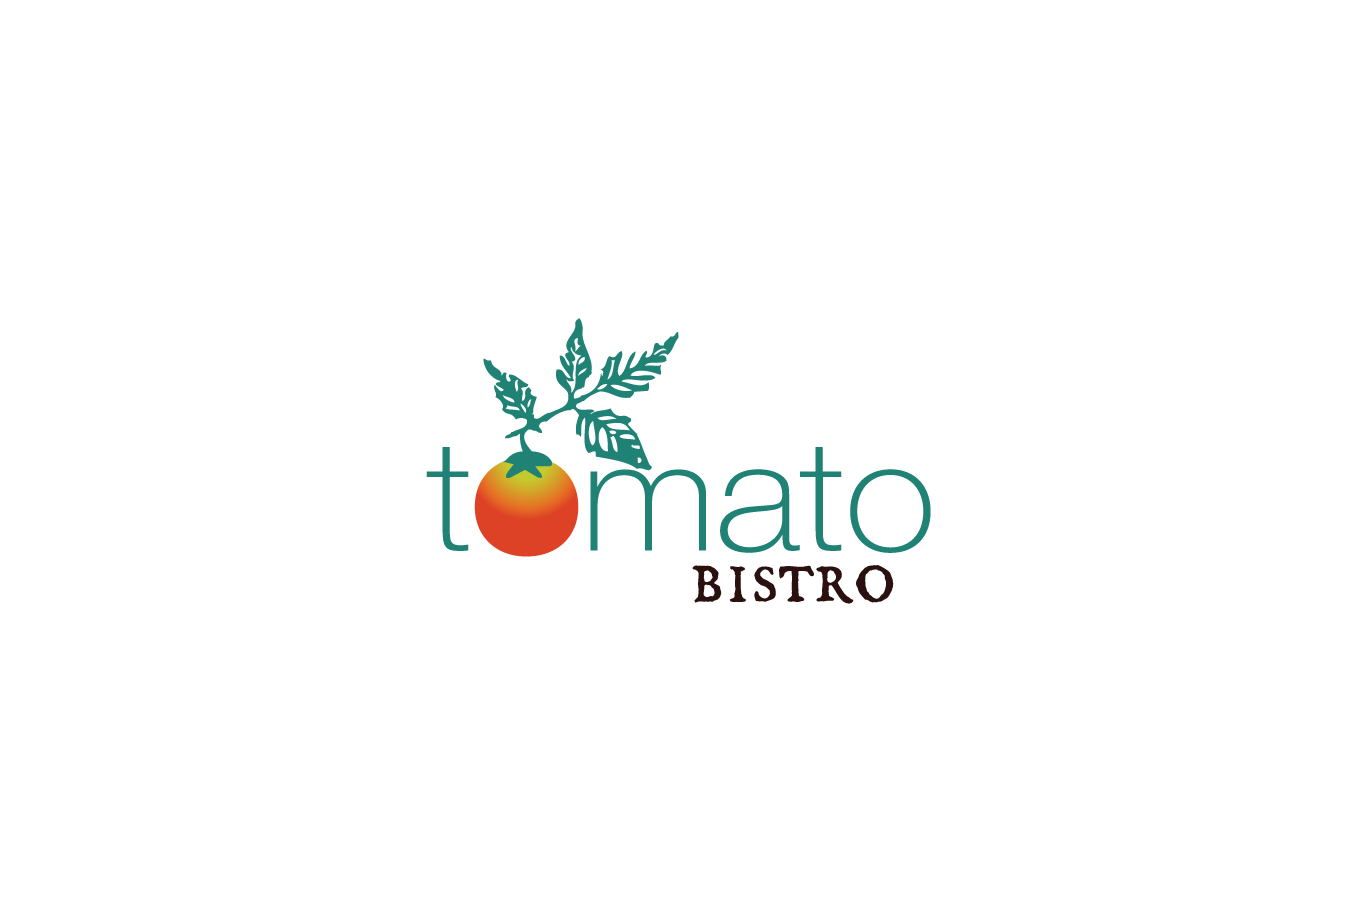 tomato bistro logo design logo cowboy #32150